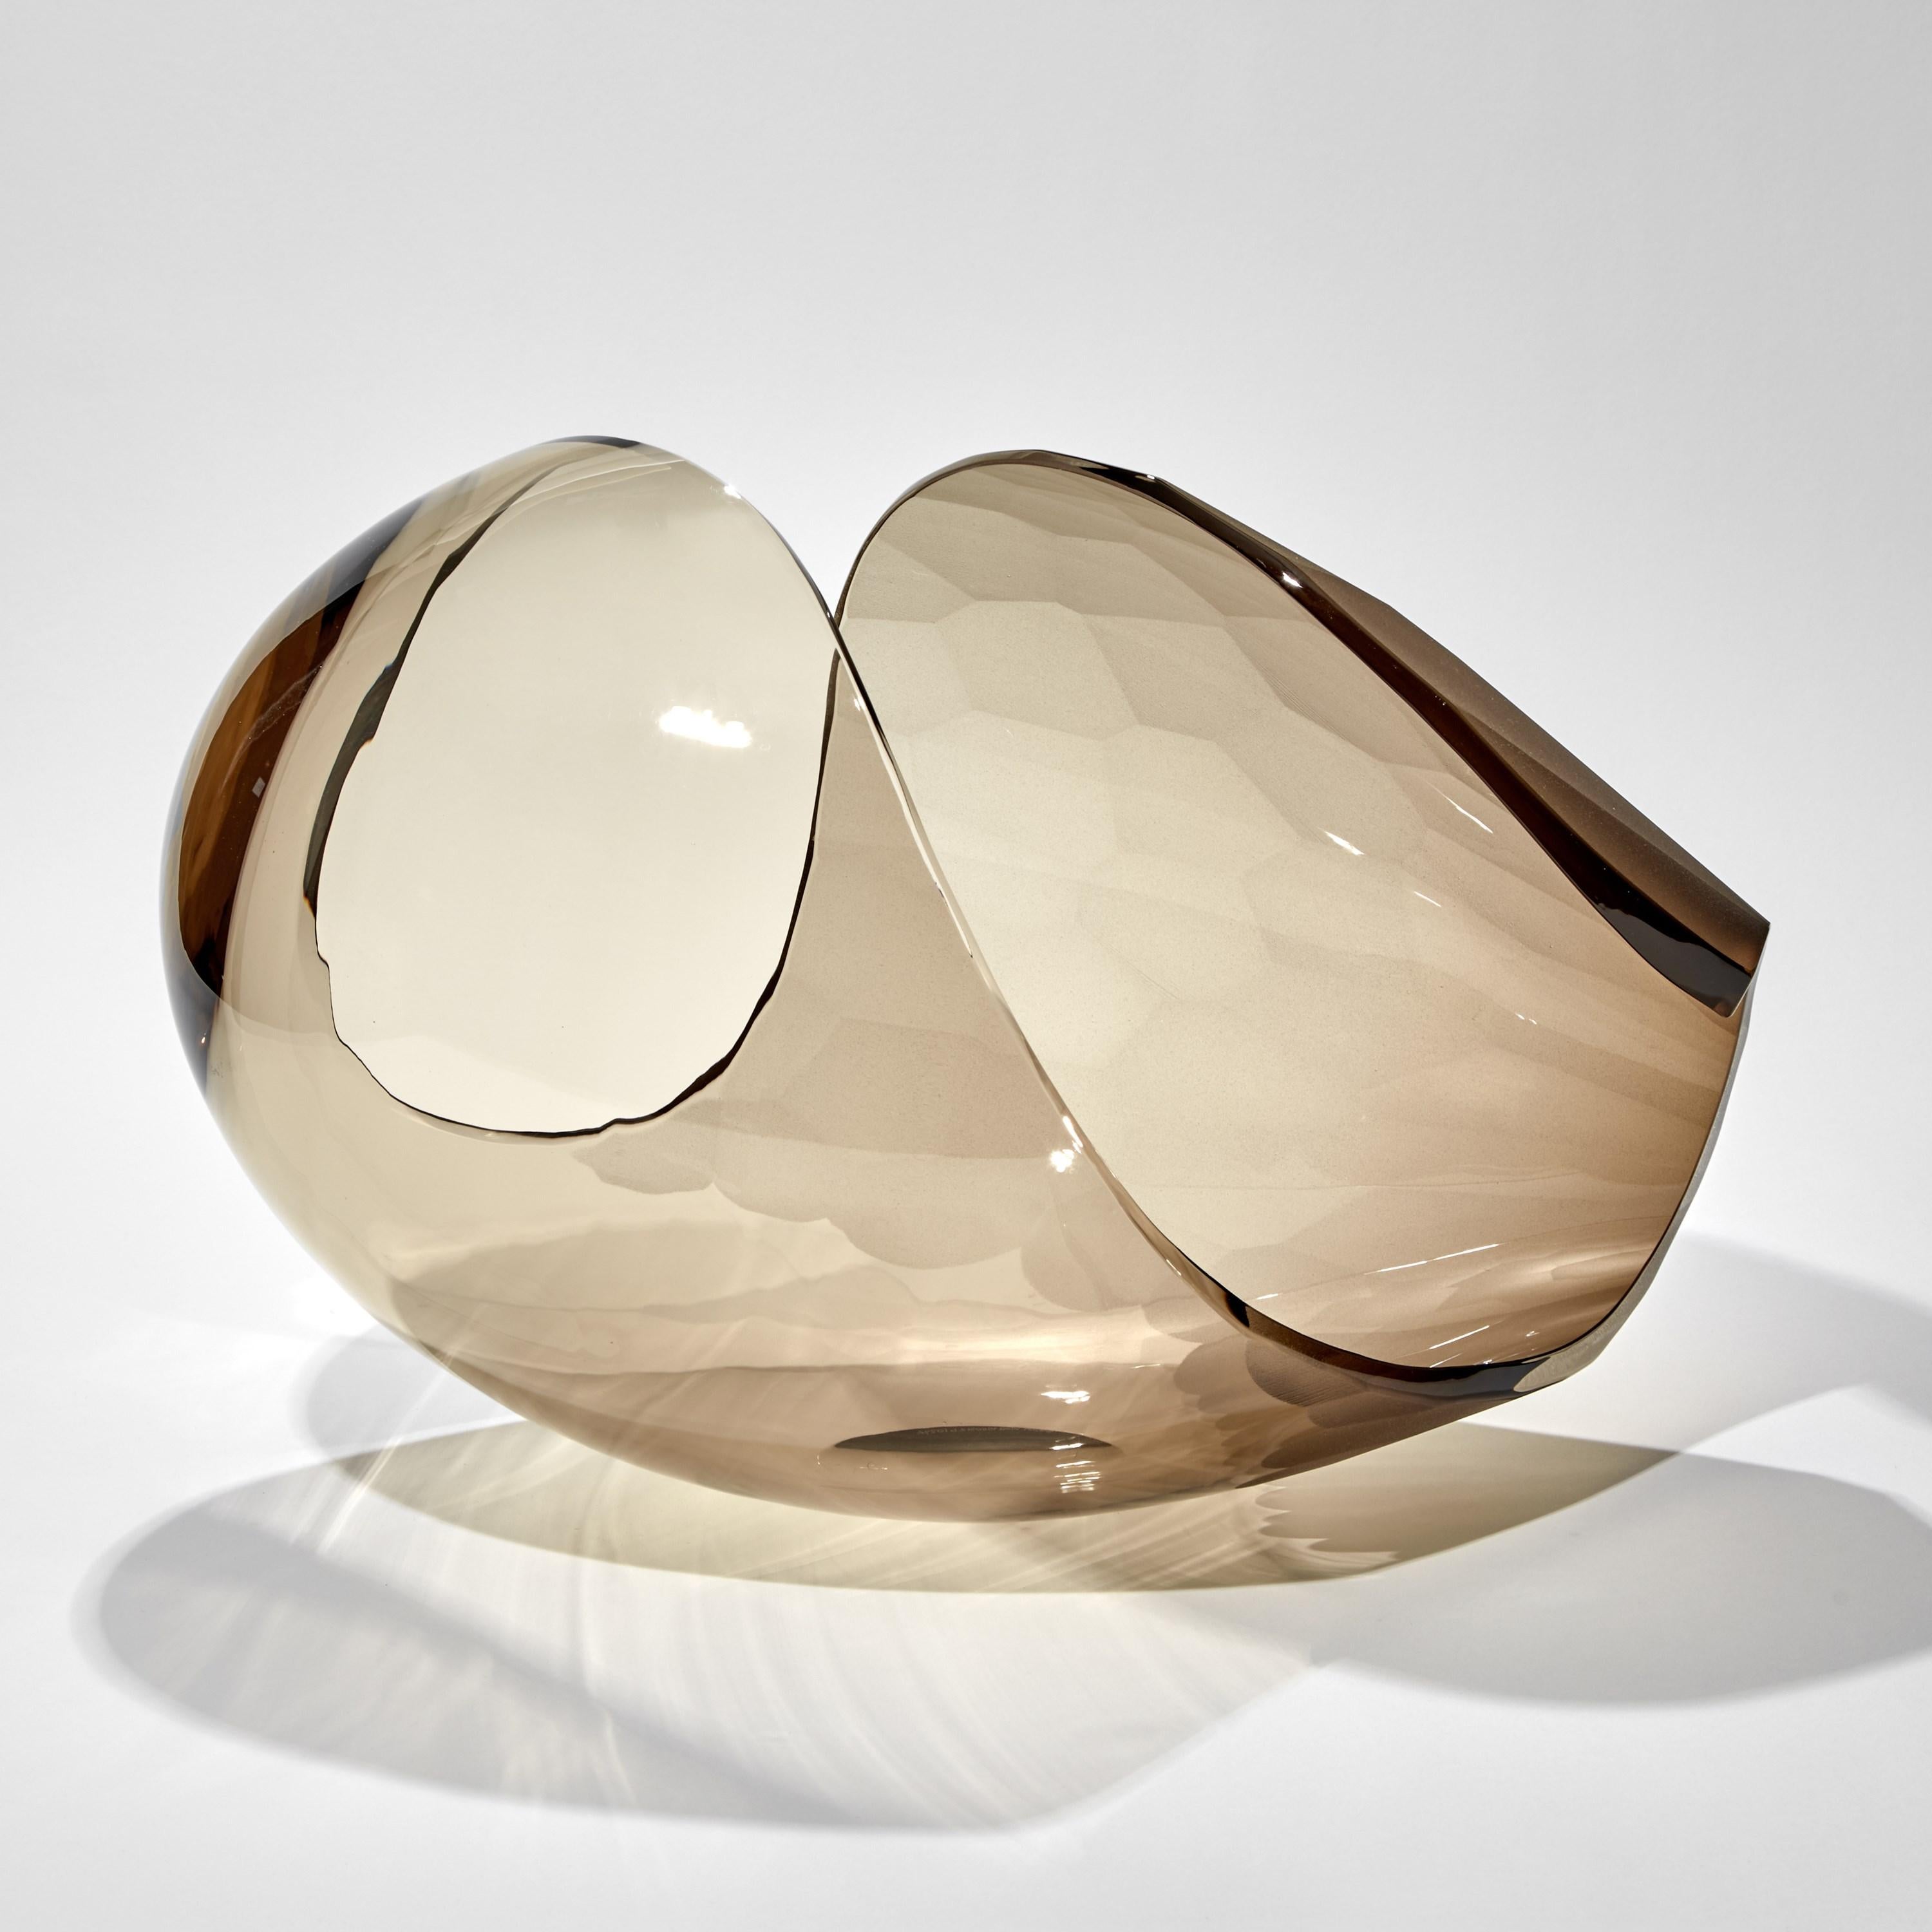 Organic Modern  Faceted Planet in Bronze, a unique Glass Sculpture by Lena Bergström